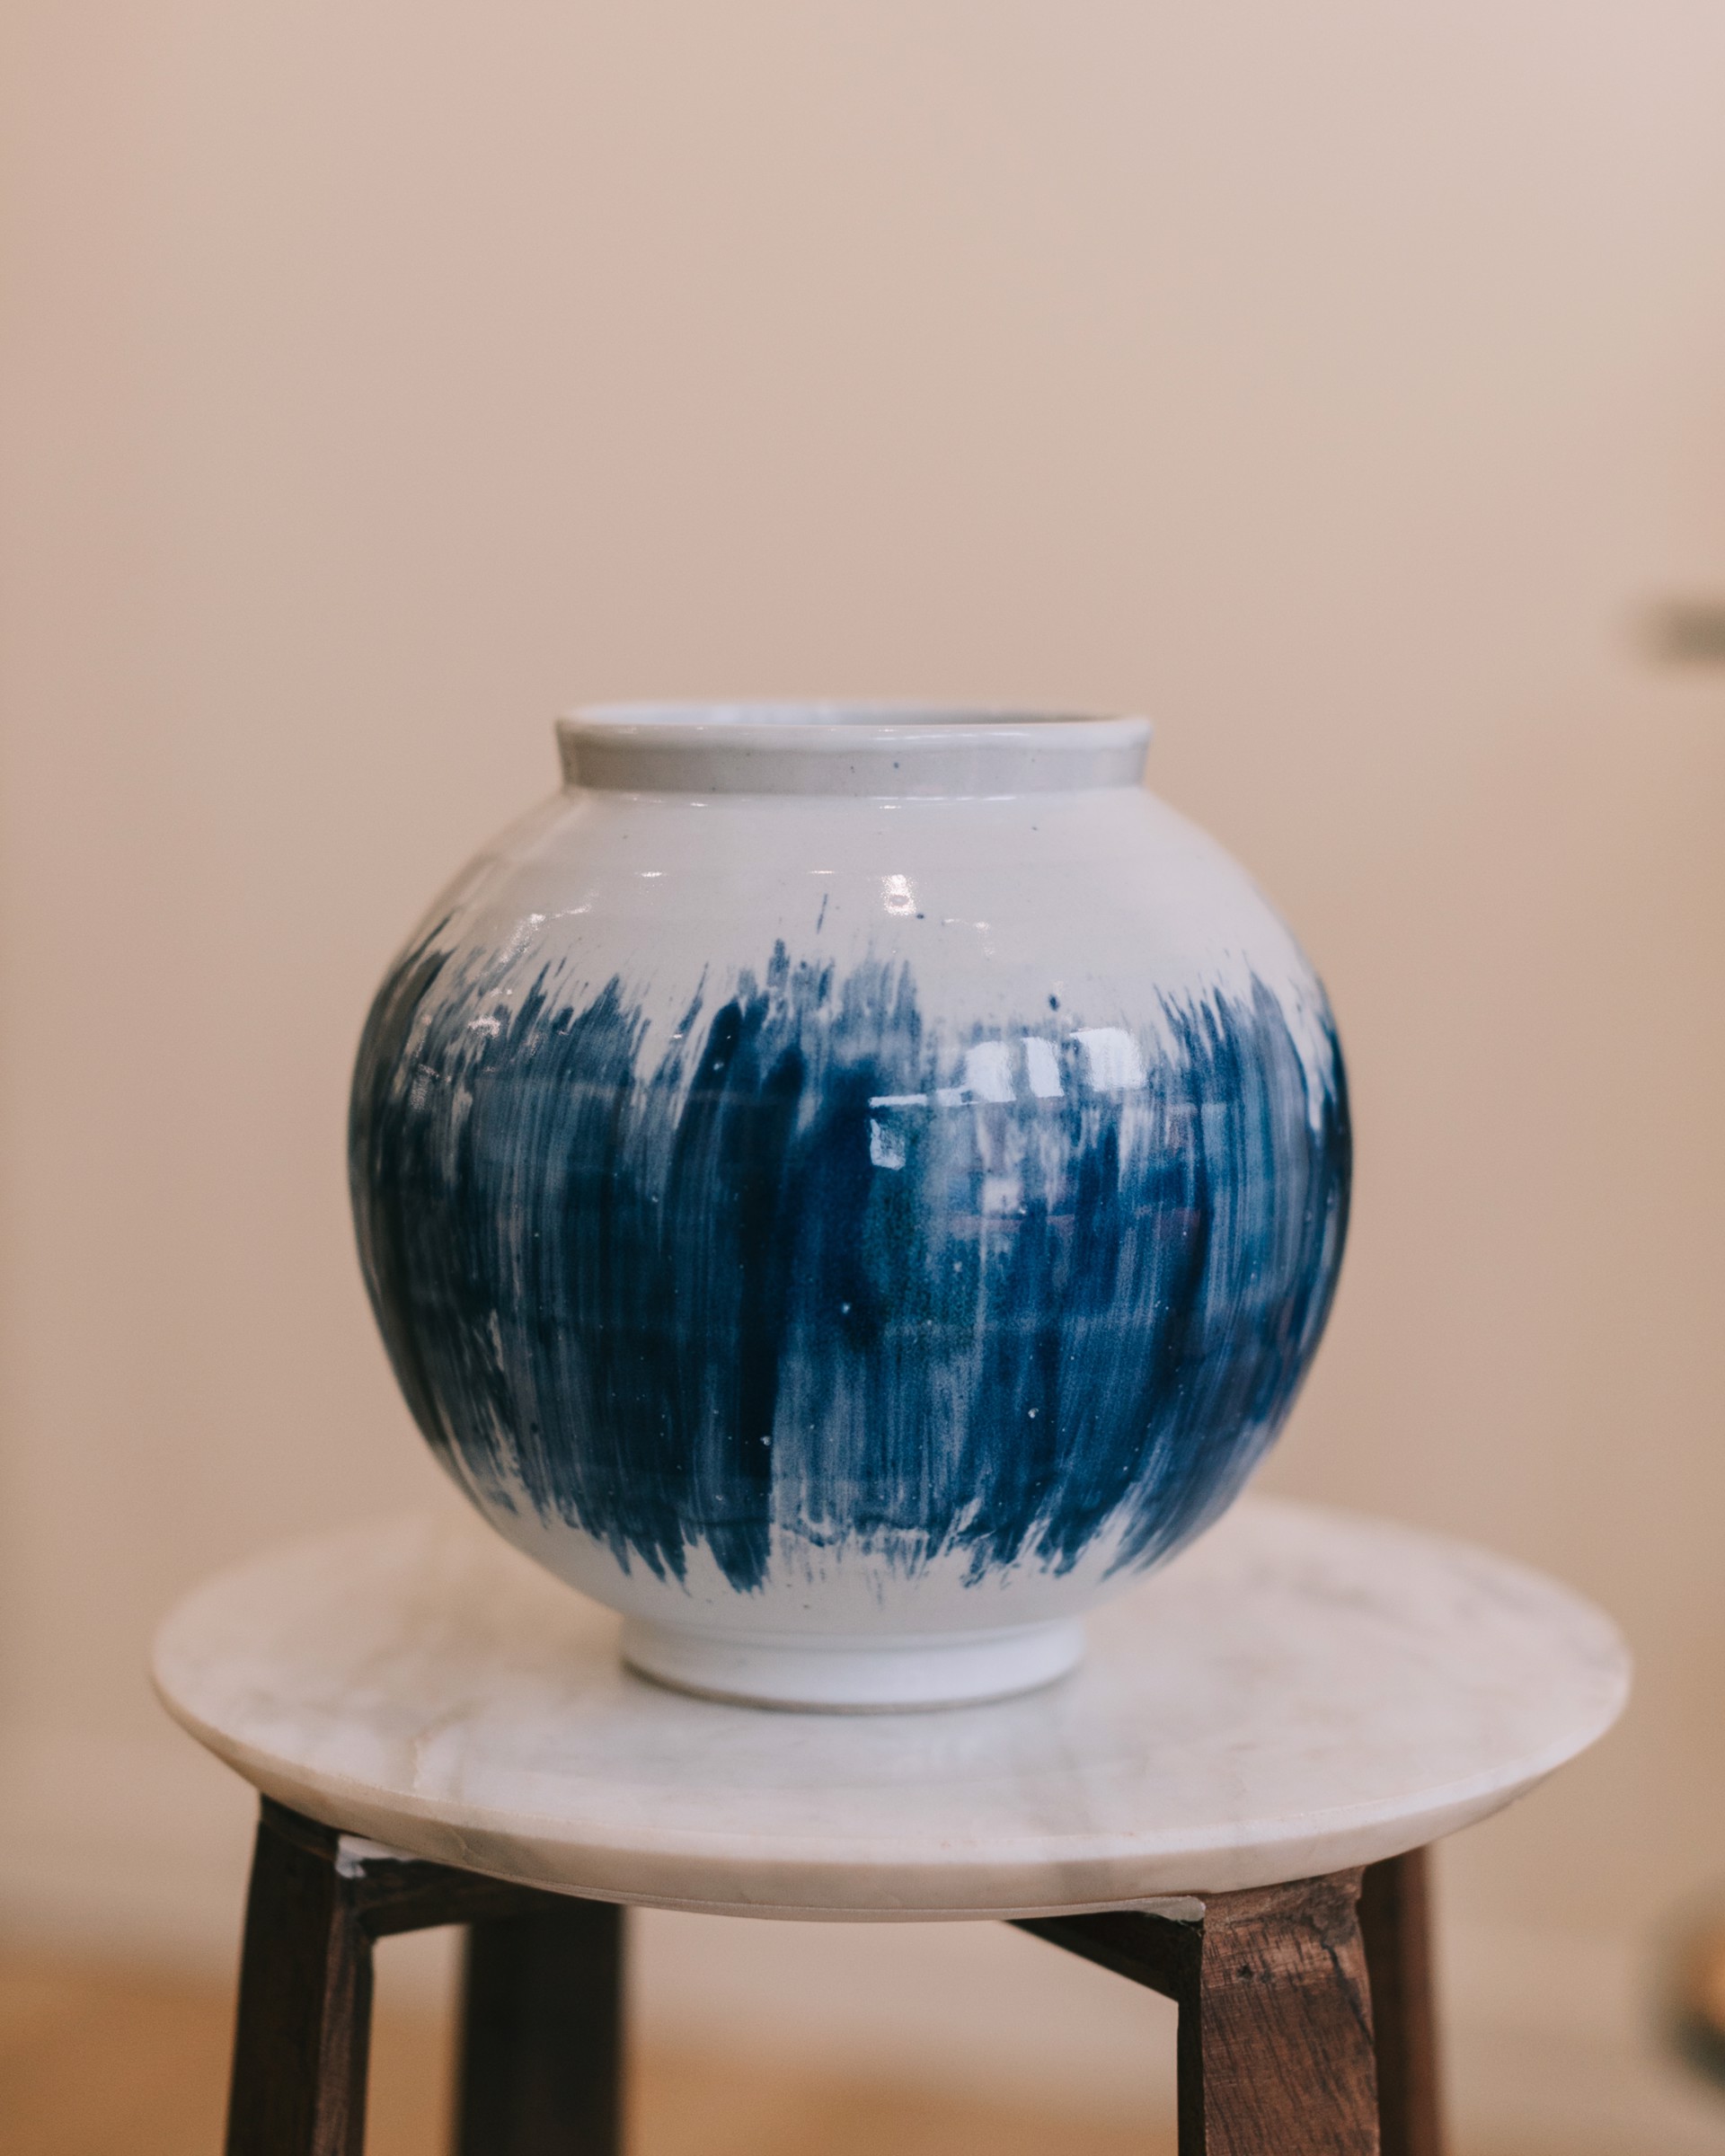 Medium Vertical Brush Stroke Vase #1 by William Mantor